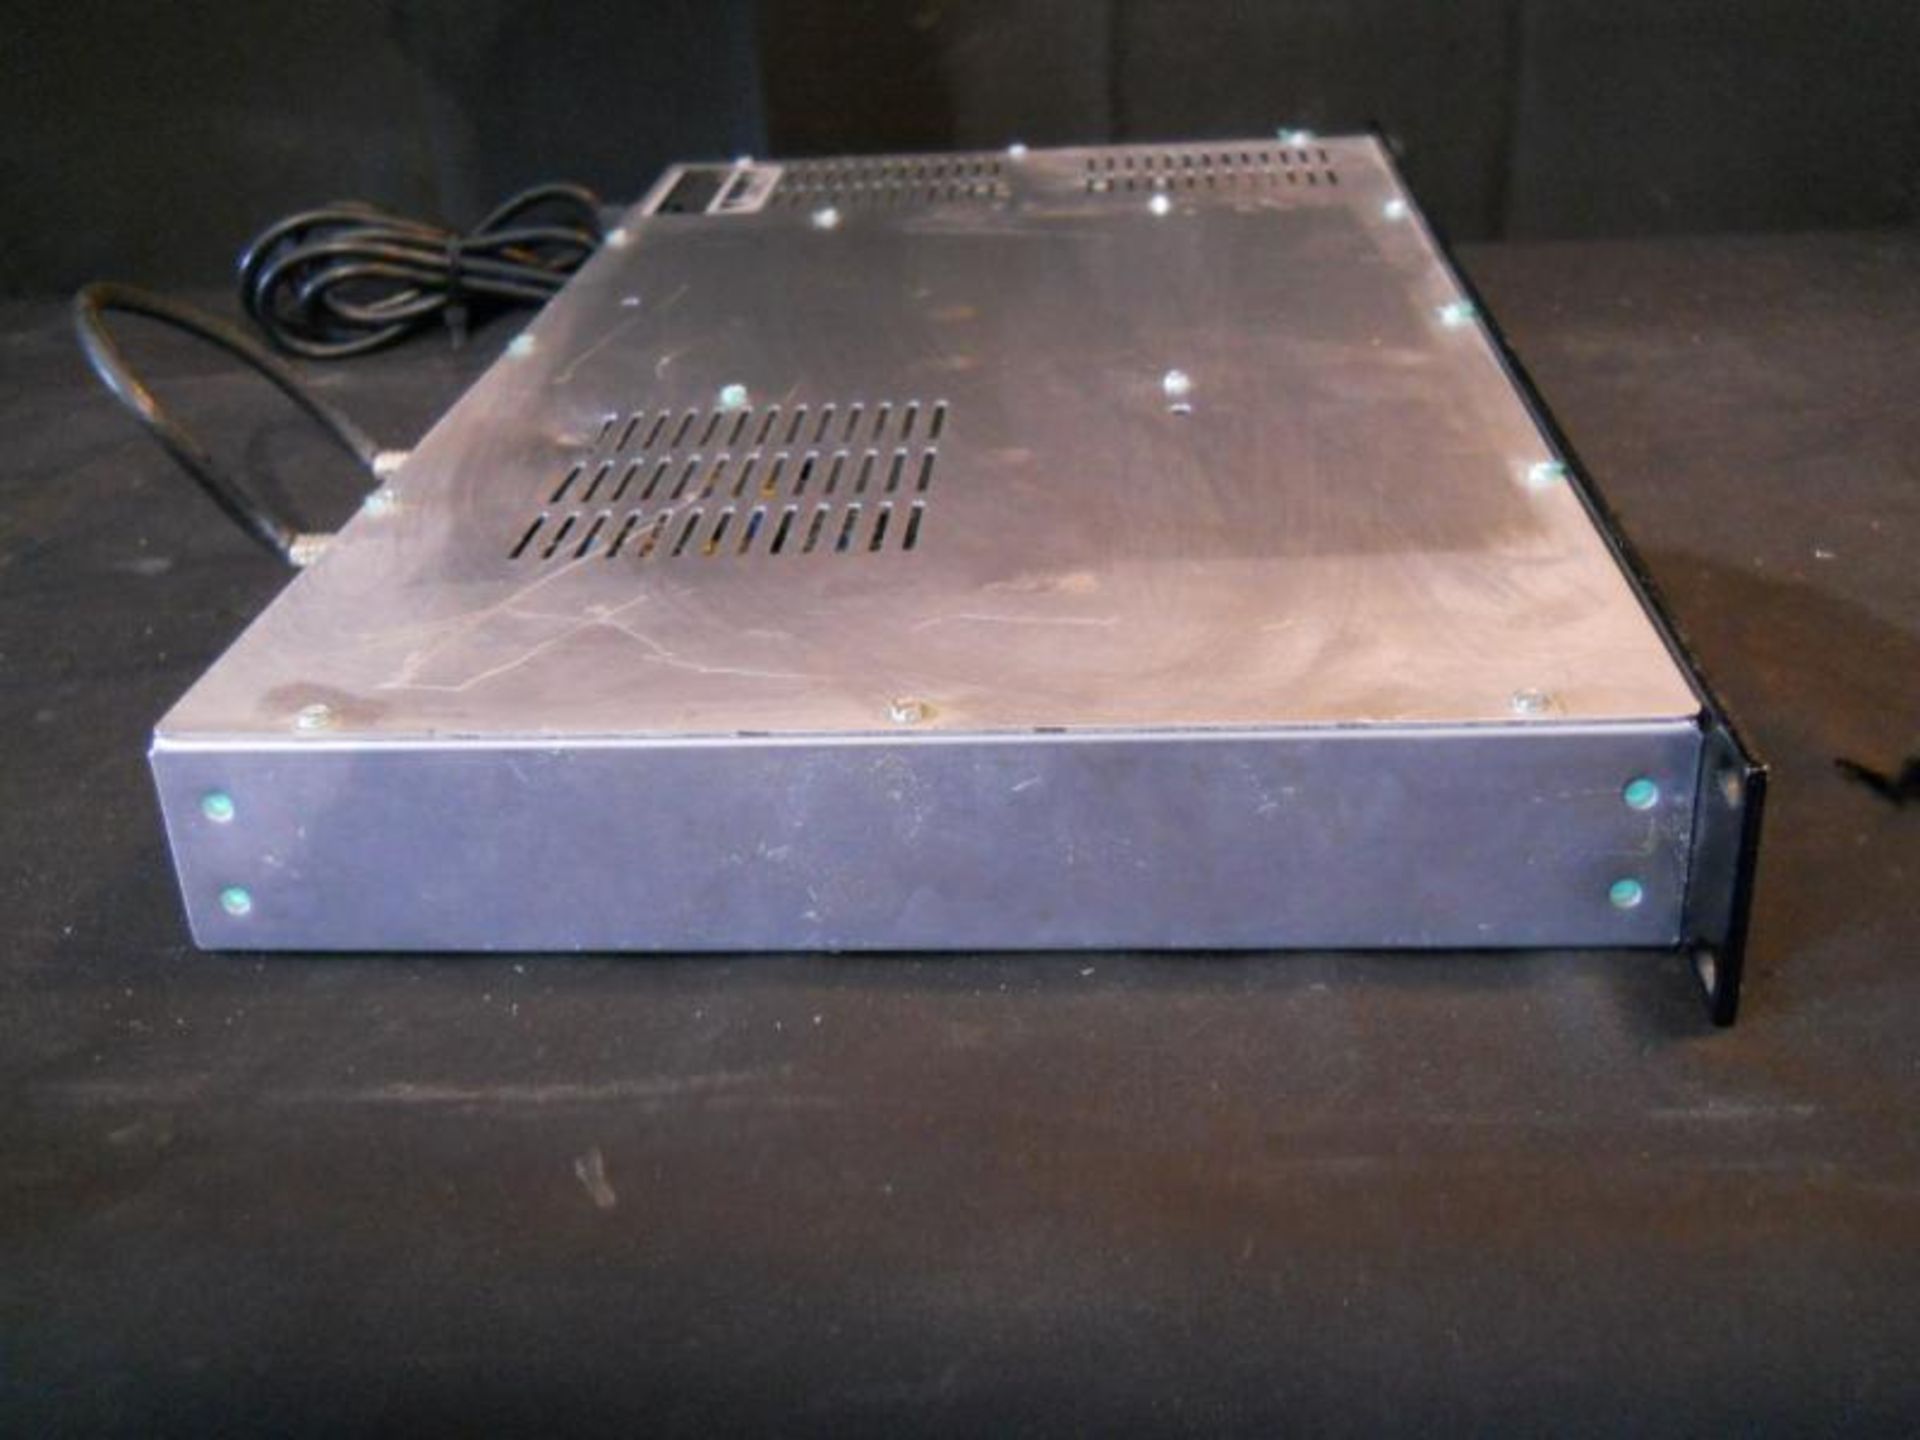 Blonder Tongue SAIP-60-860 (SAIP60860) Heretodyne Channel Processor, Qty 1 , 331948552934 - Image 7 of 7